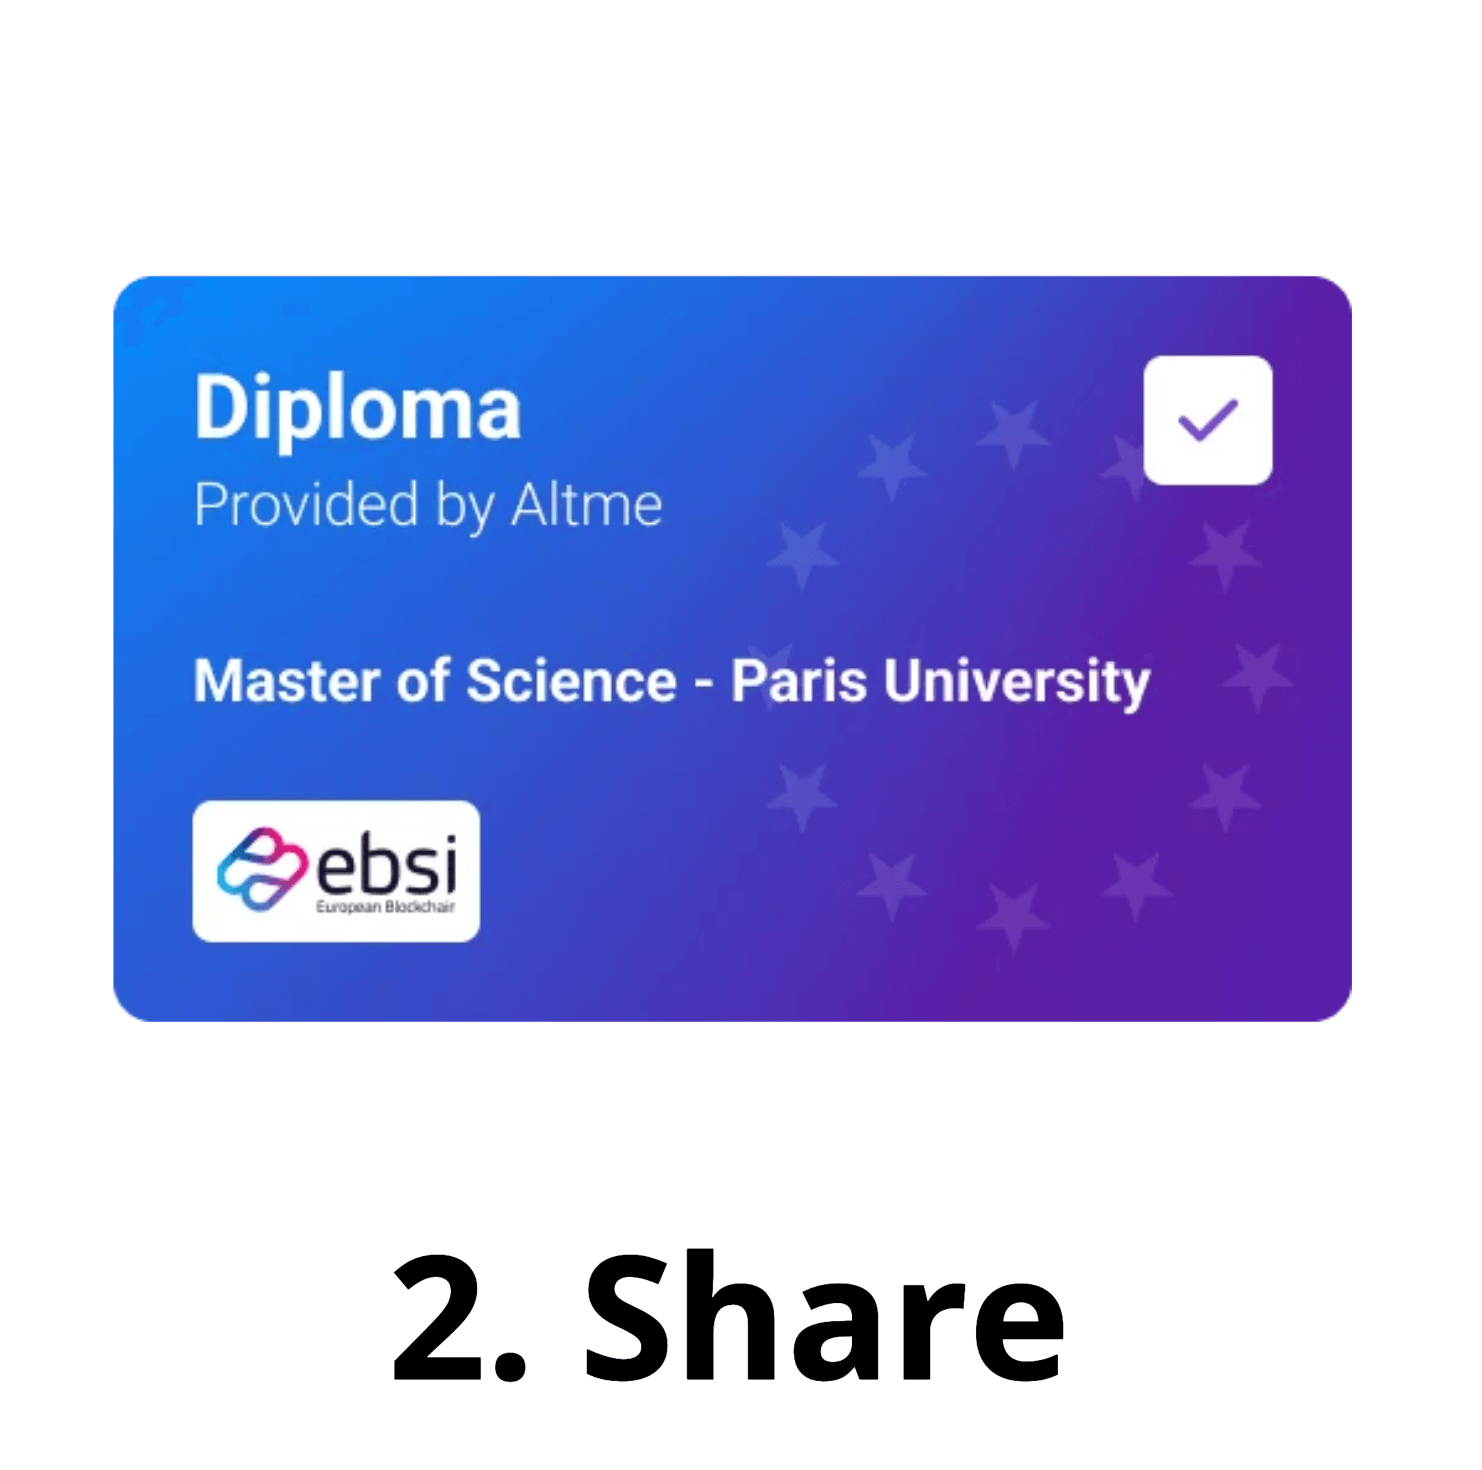 Altme nft ebsi diploma tezos student europe graduate verifiable credential university